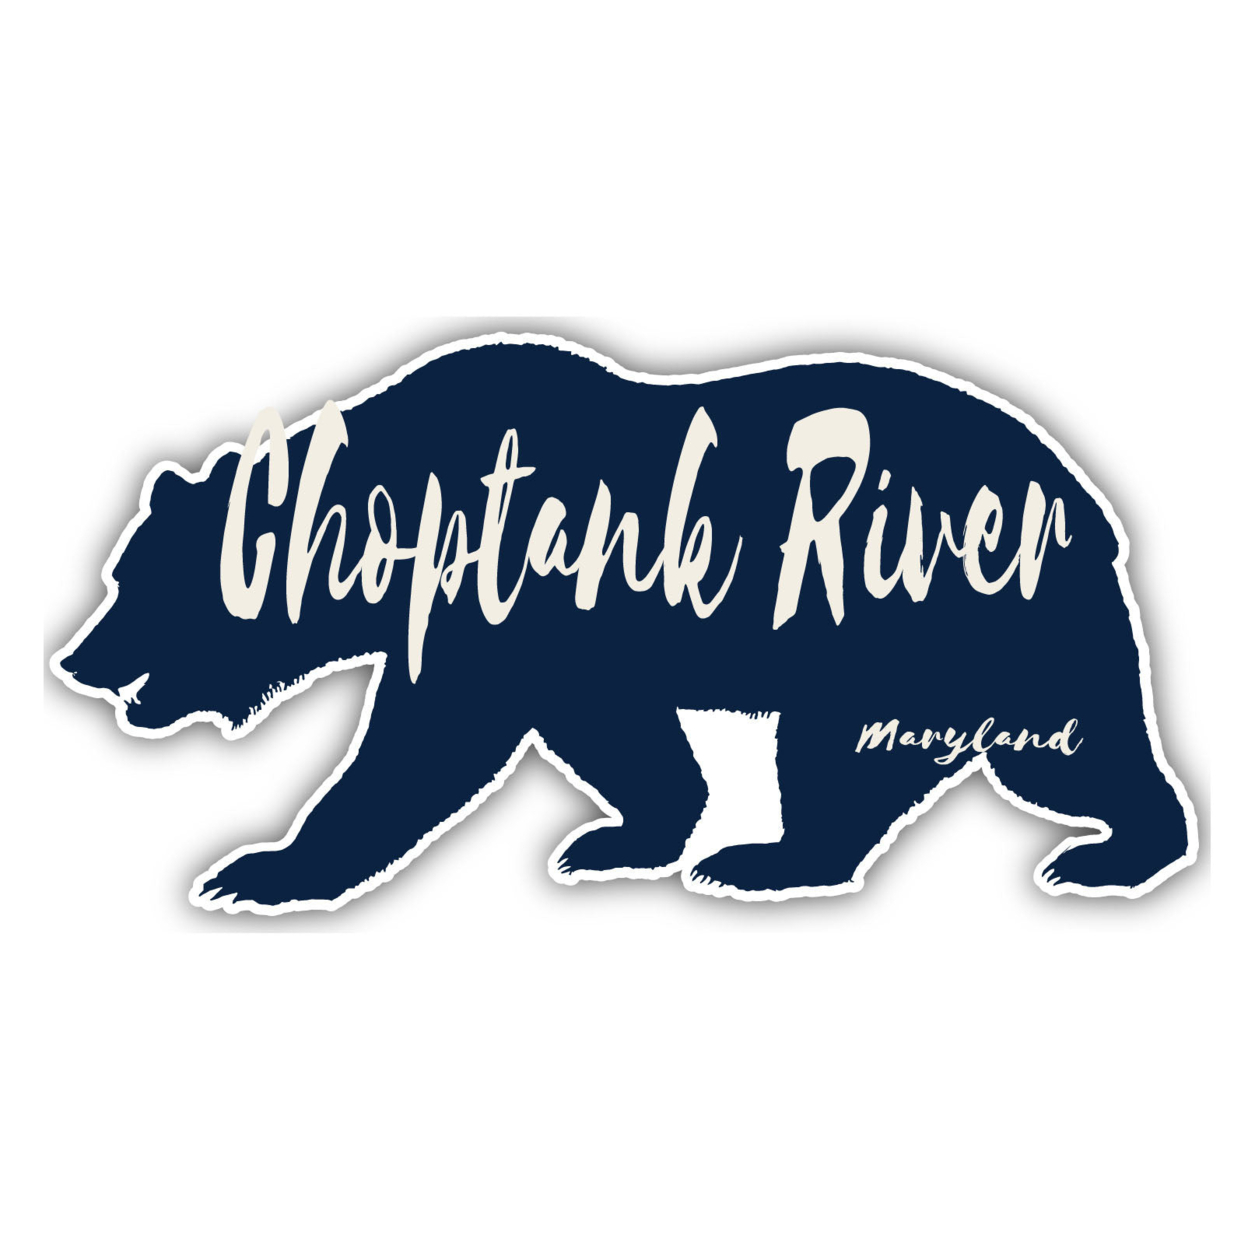 Choptank River Maryland Souvenir Decorative Stickers (Choose Theme And Size) - Single Unit, 6-Inch, Bear